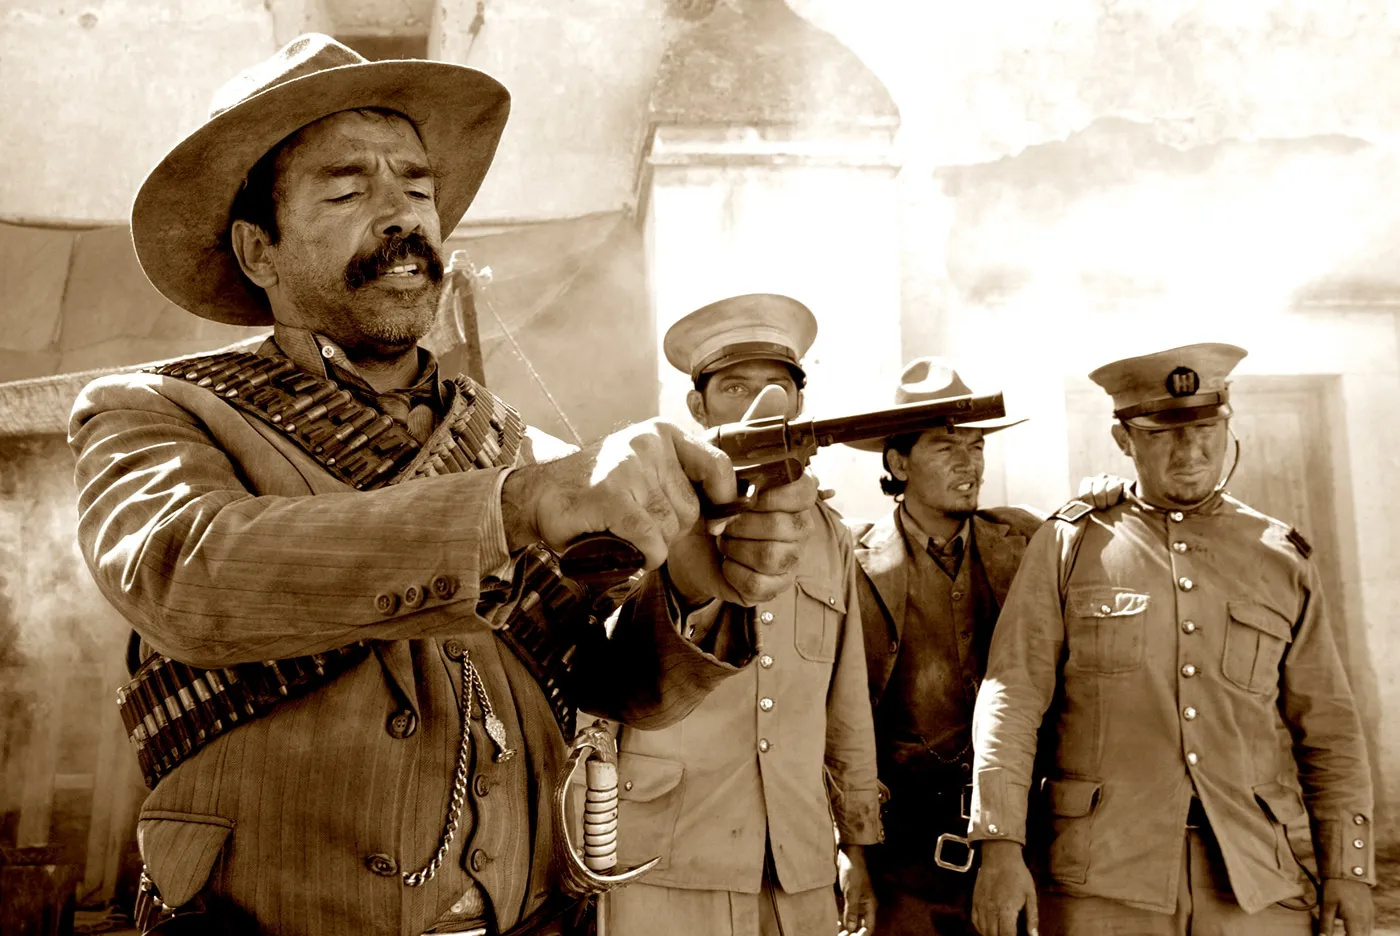 Prayer or spell to Francisco Pancho Villa